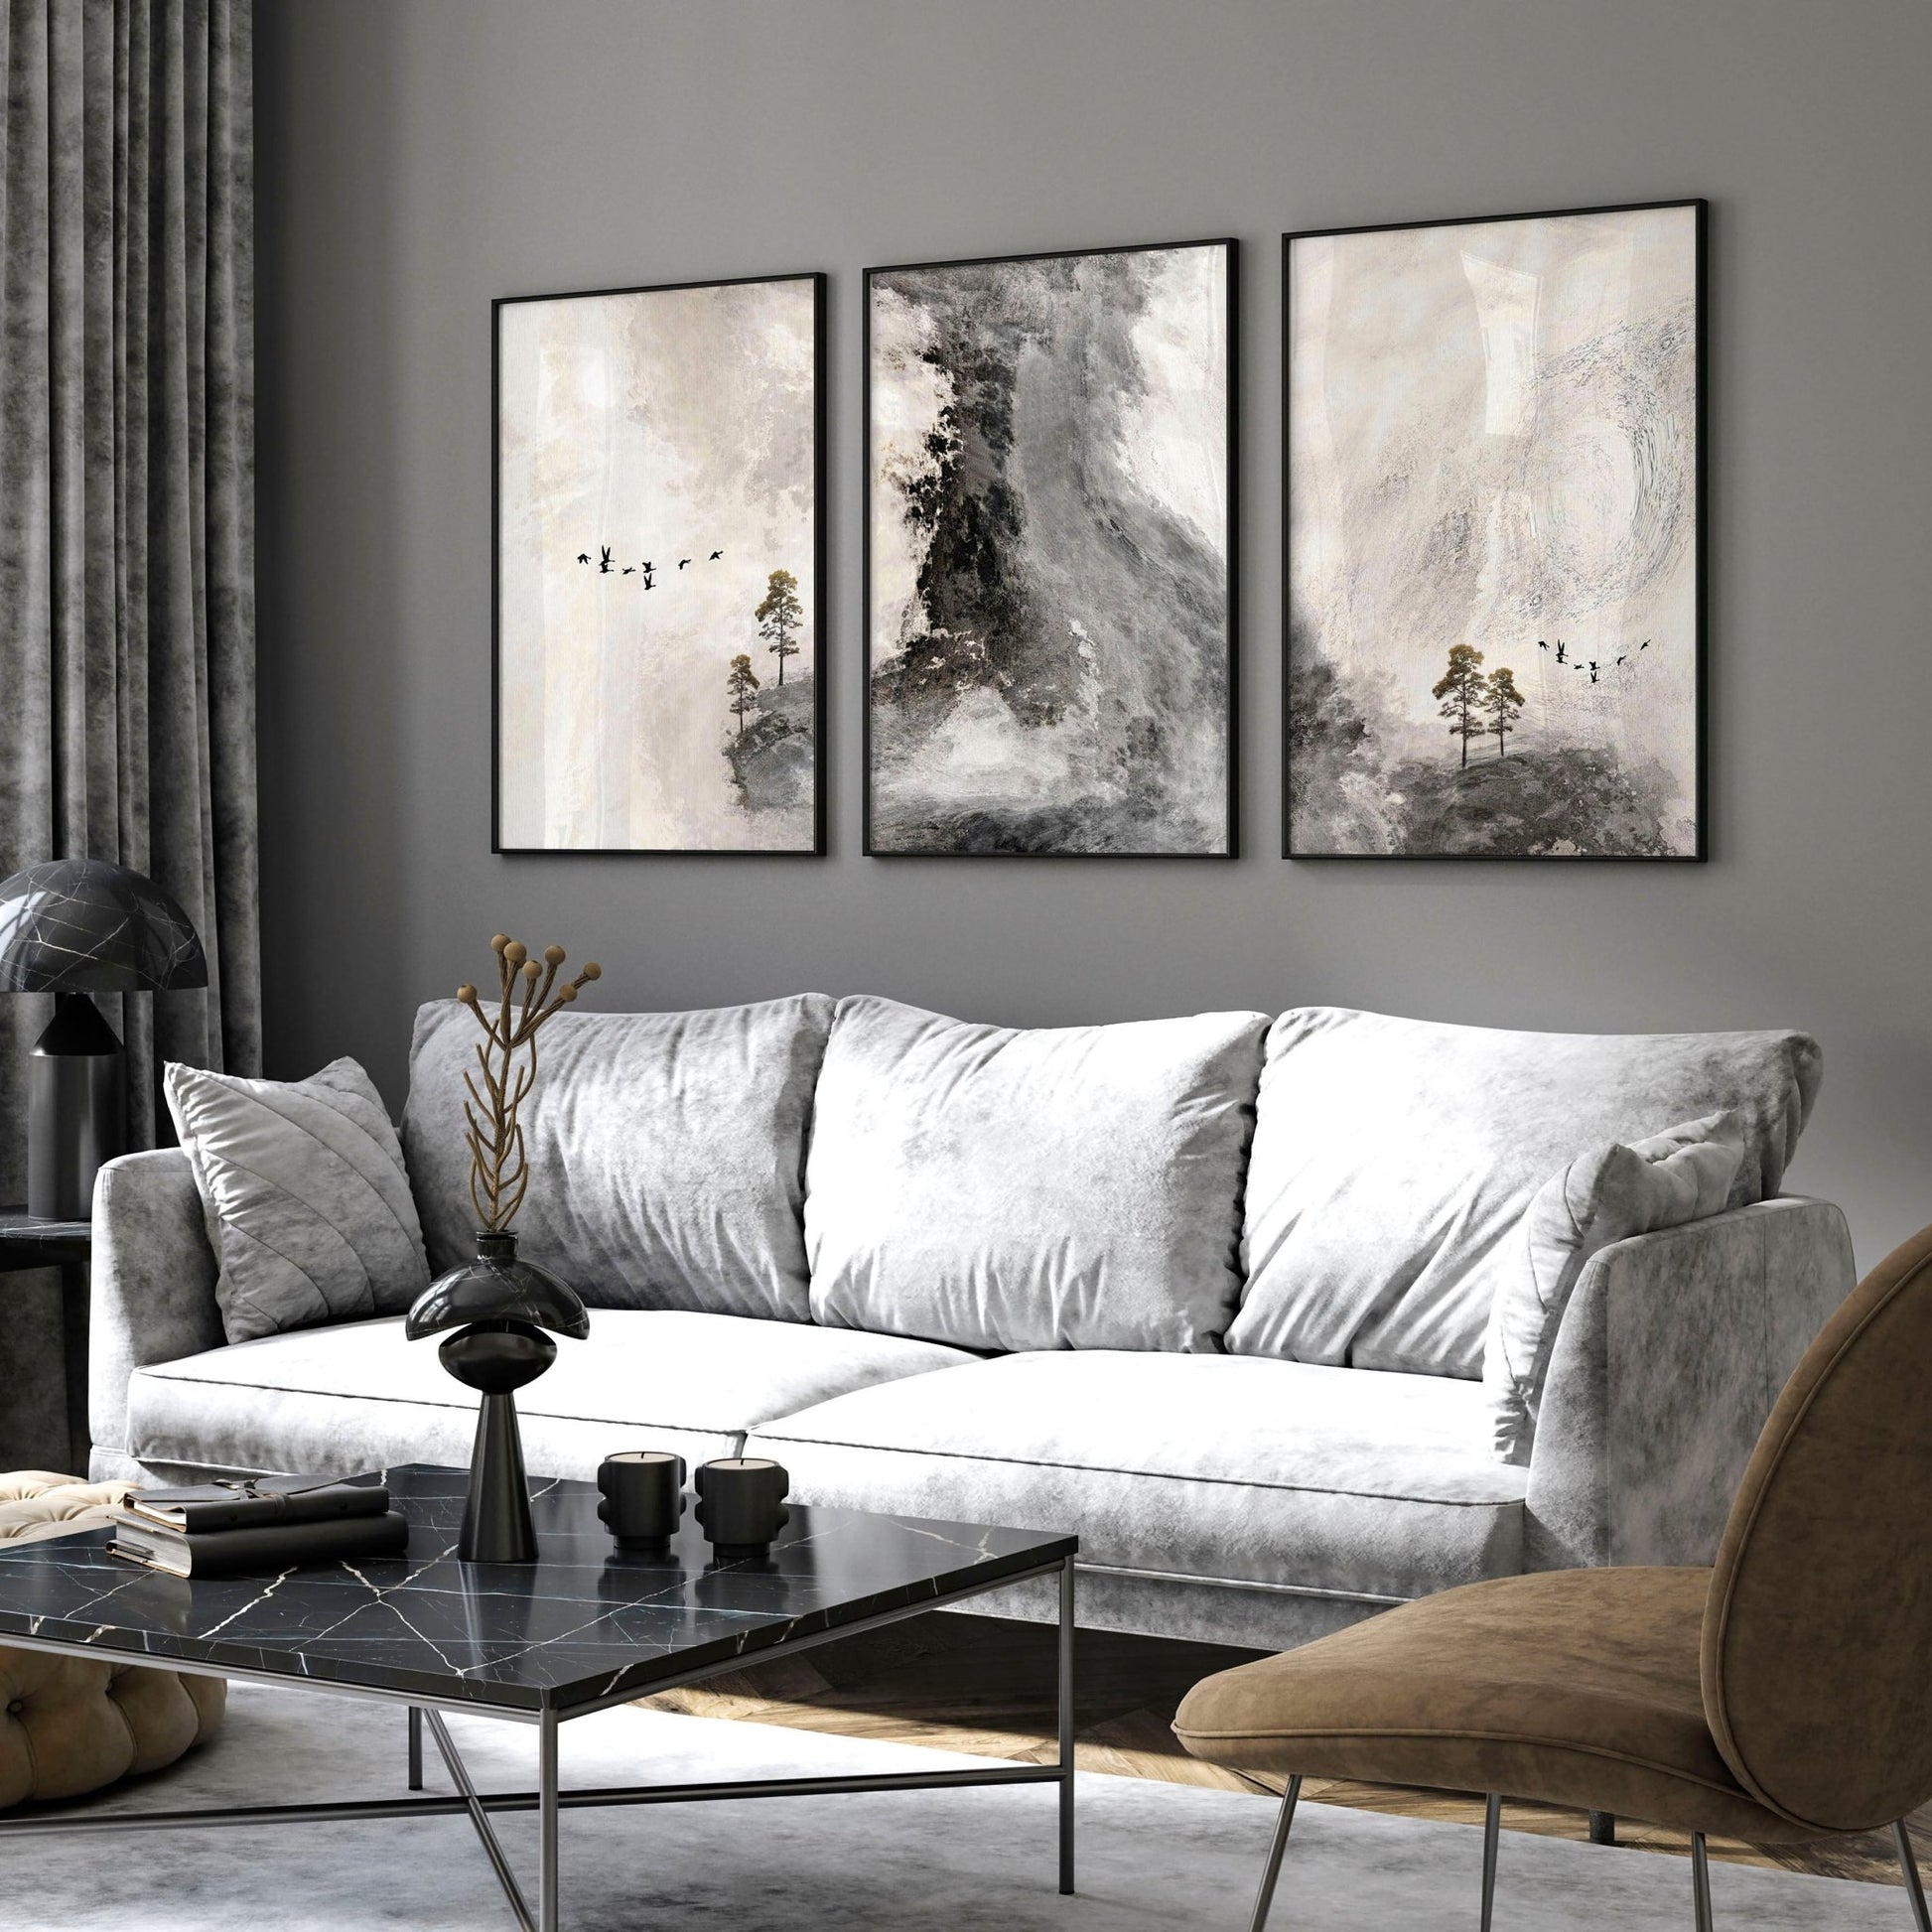 Large living room wall art | set of 3 Neutral wall art prints